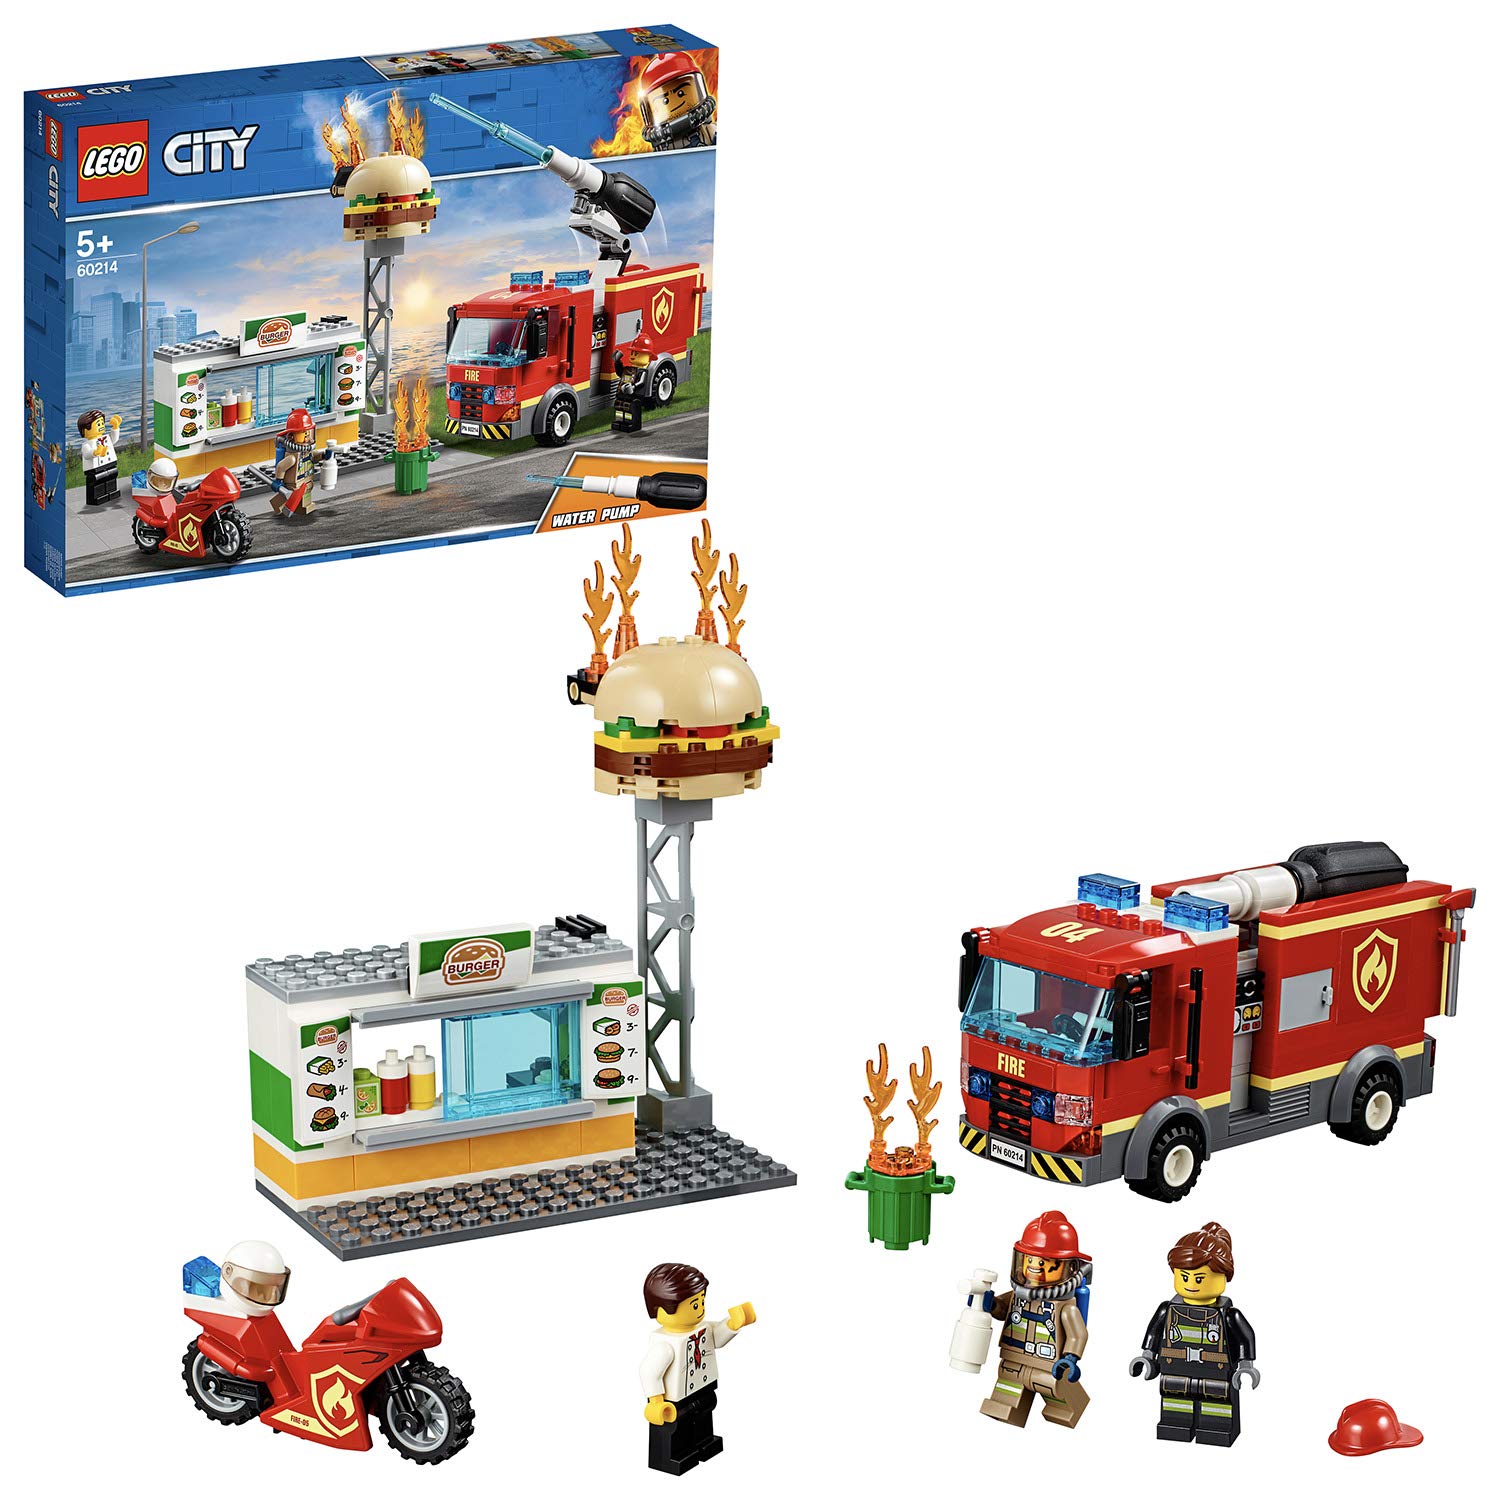 Lego City 60214 Burger Restaurant Fire Service